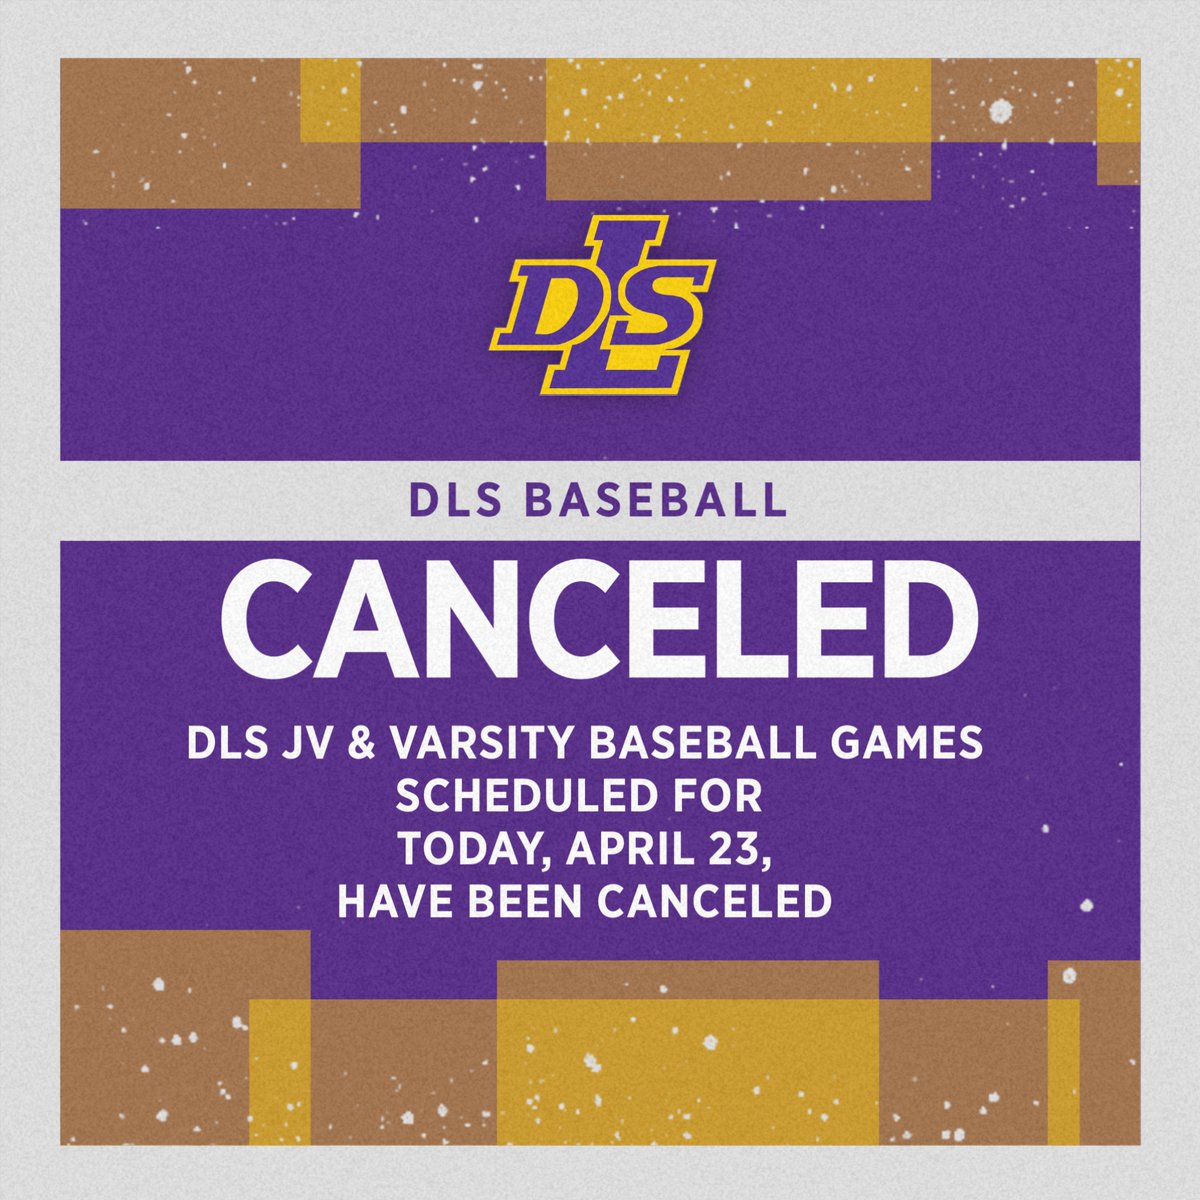 DLS JV and Varsity baseball games scheduled for today v St Francis de Sales have been canceled.

#PilotPride